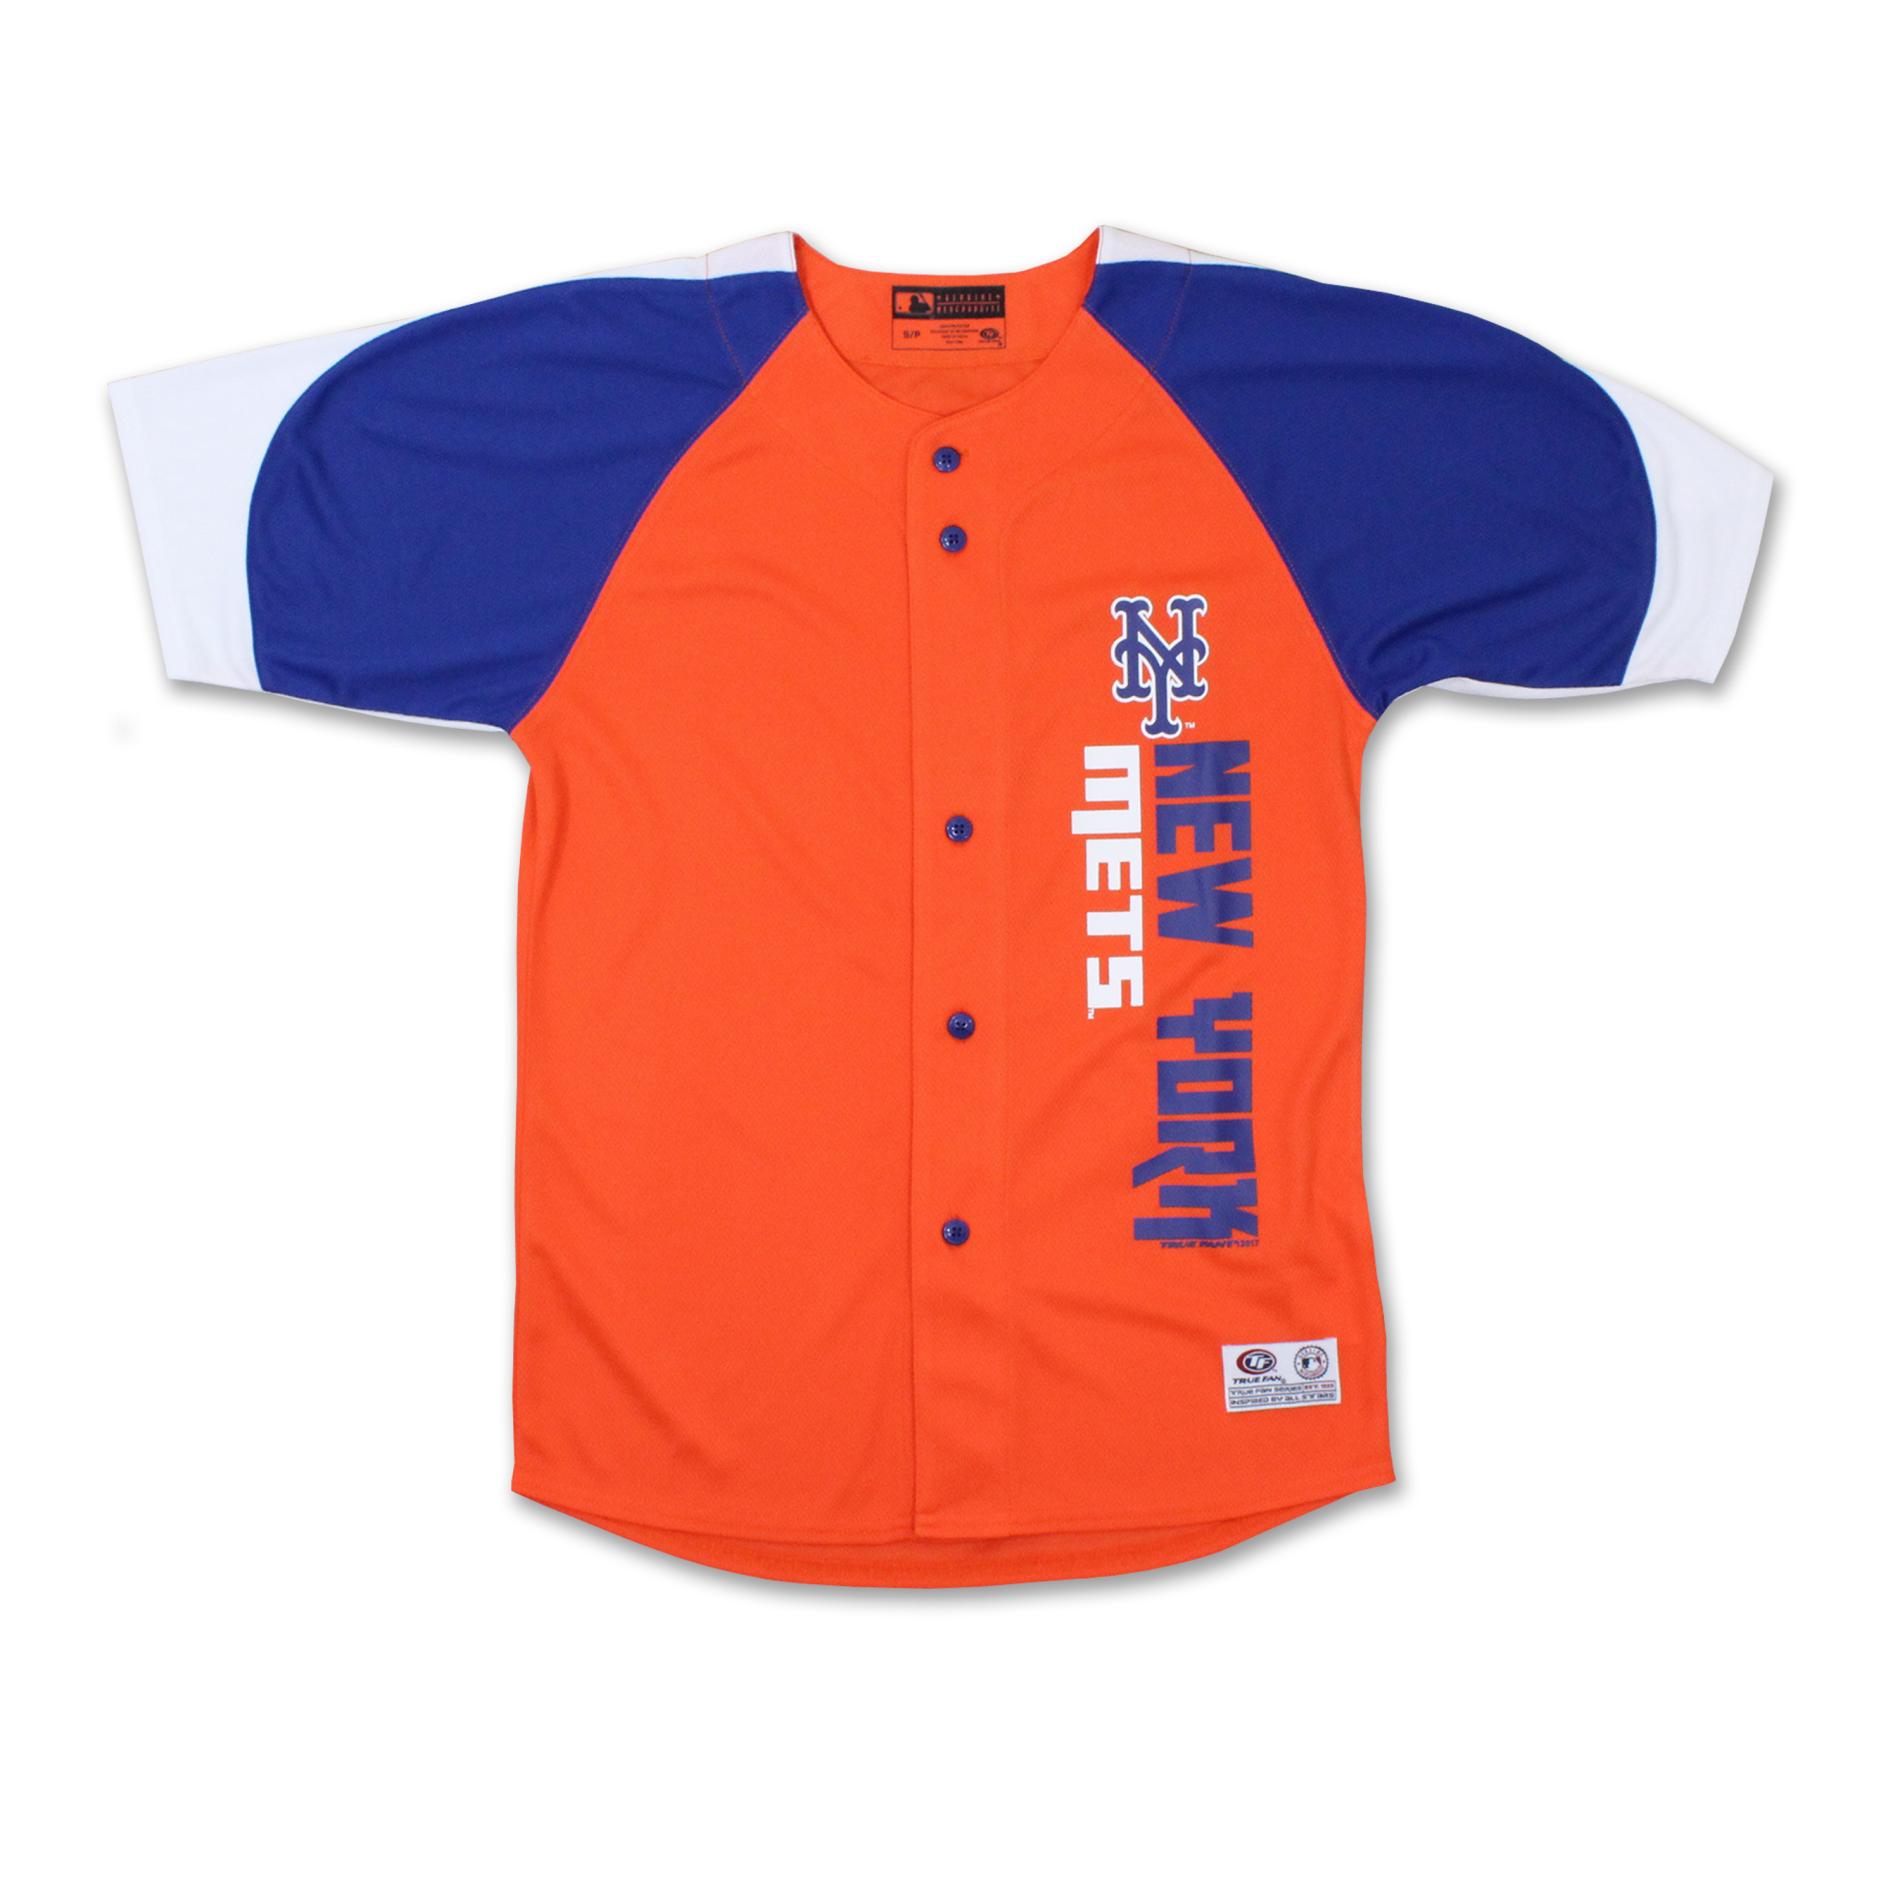 MLB Boys' Colorblock Baseball Jersey - New York Mets